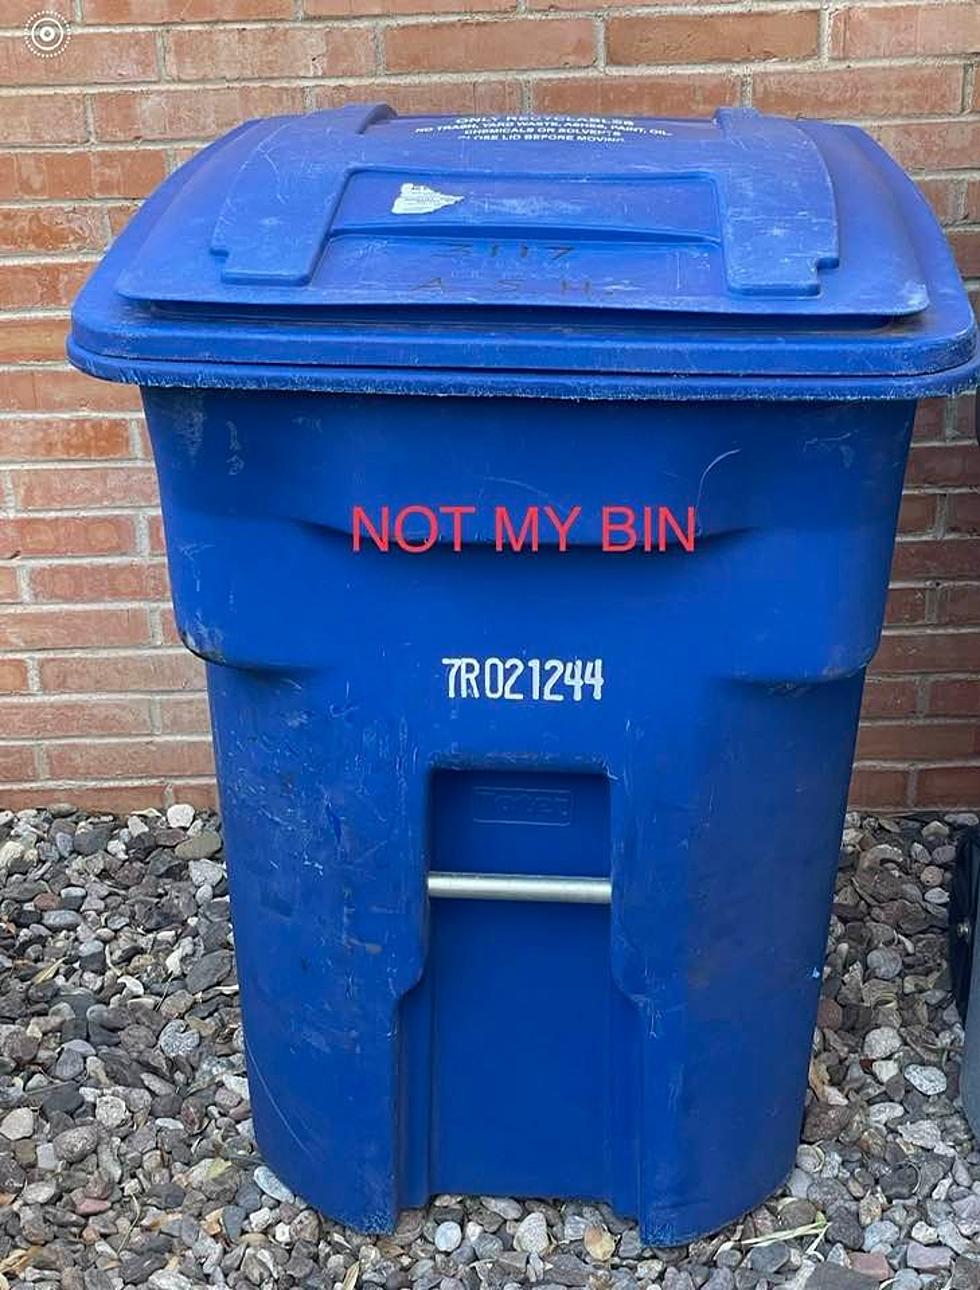 Trash Guys Take My Blue Bin-City Says Go To Class To Get It Back